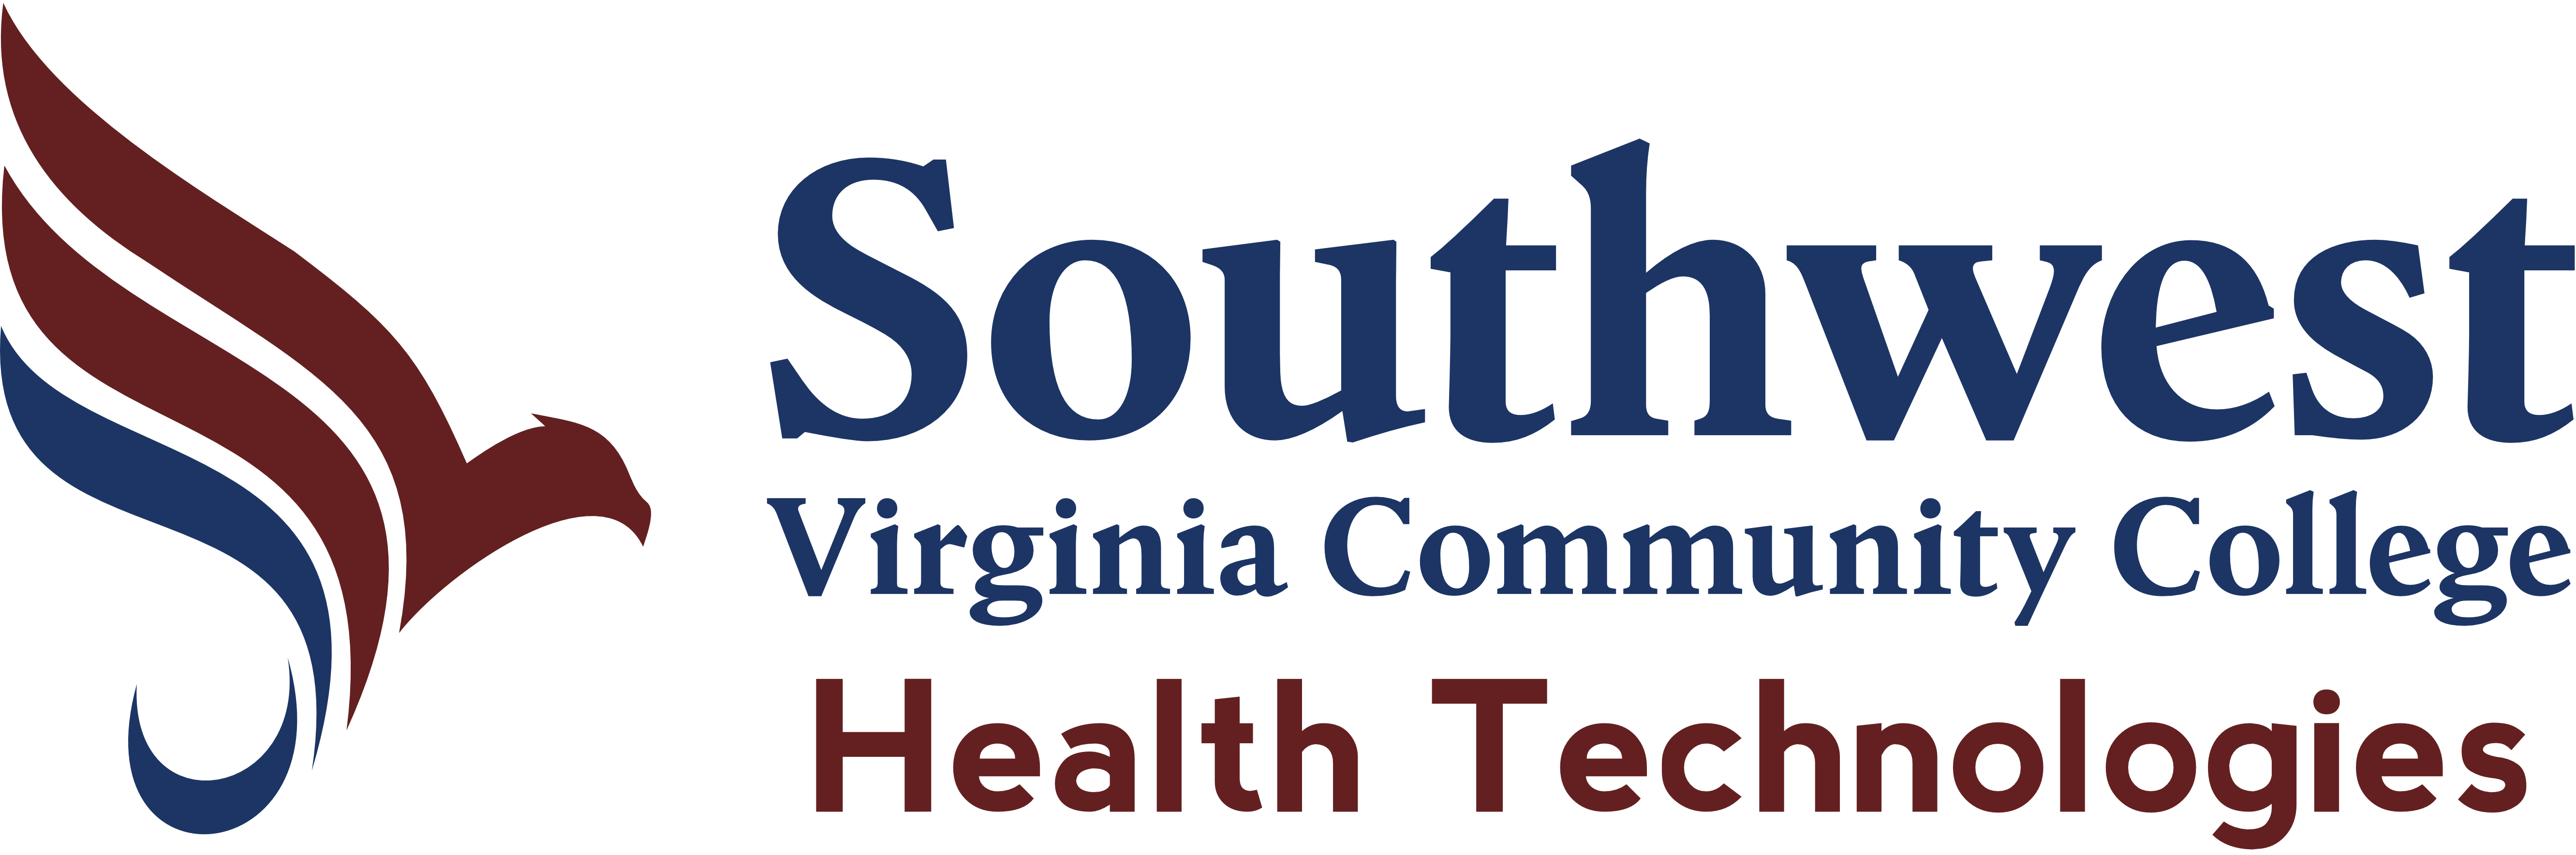 SWCC Health Technologies